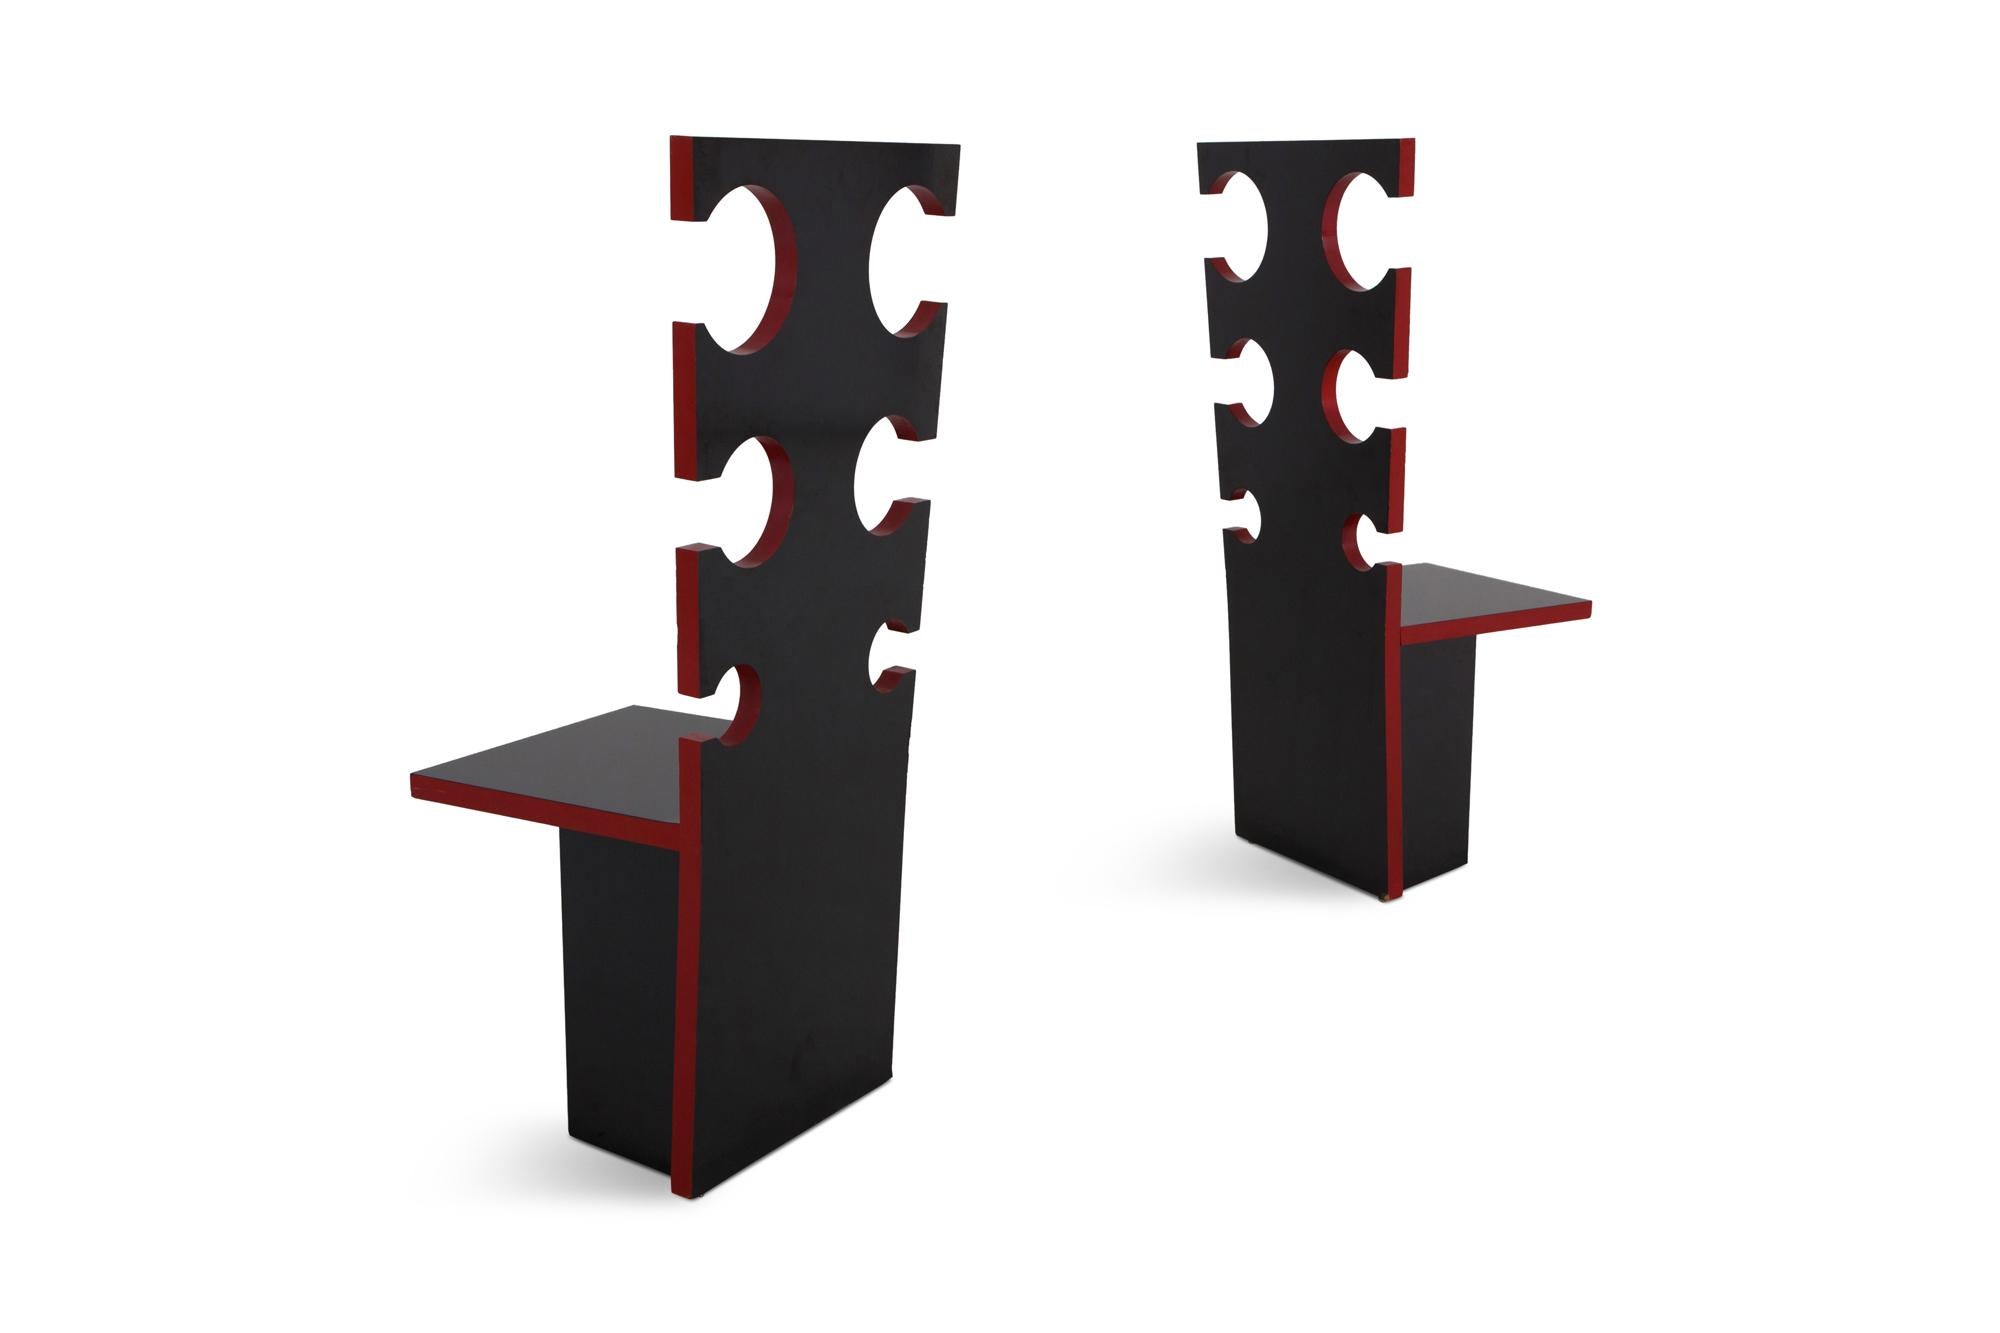 Sculptural chairs by Max Papiri for Mario Sabot 1